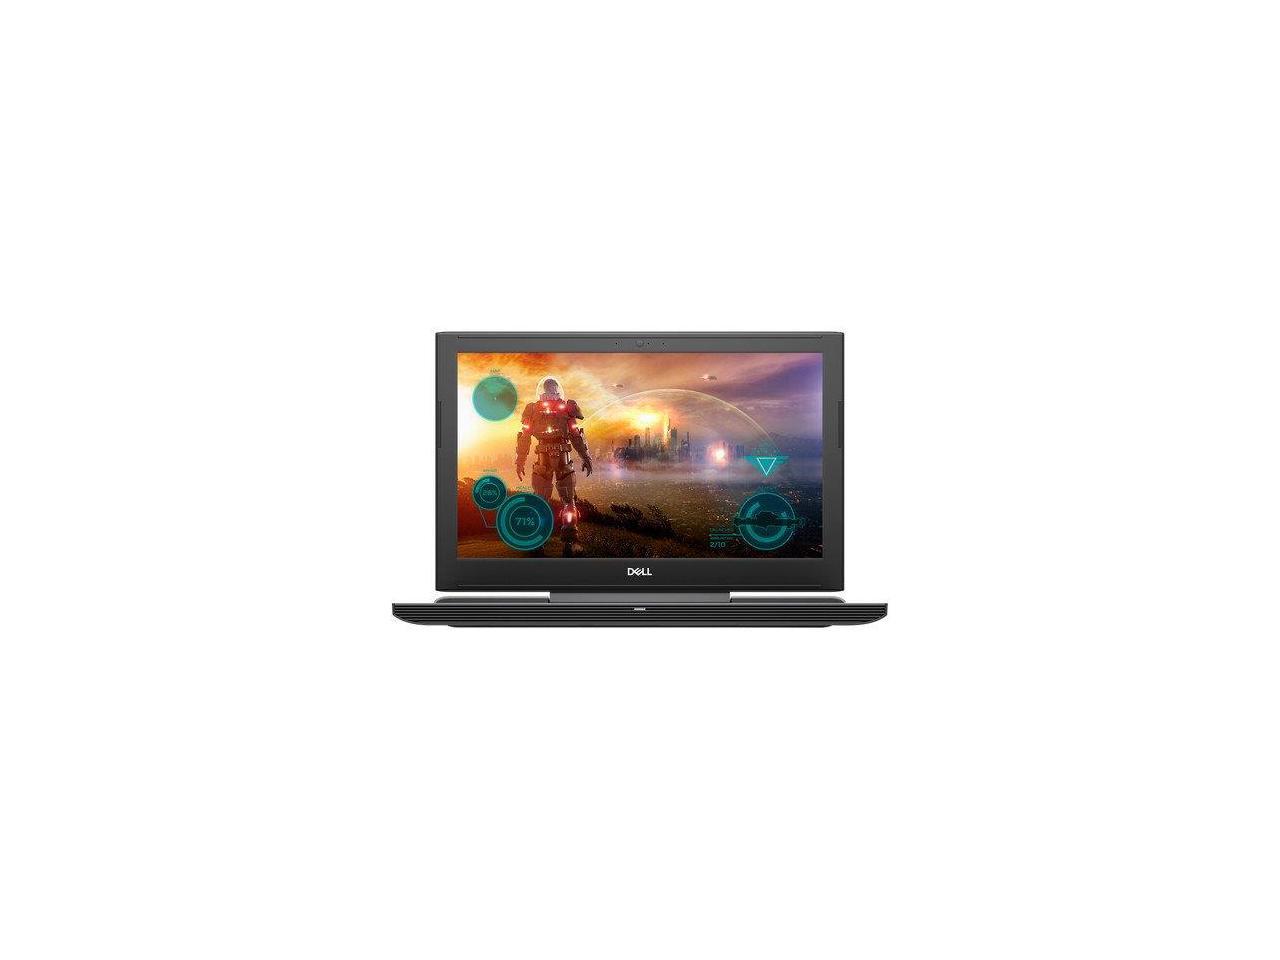 Dell Inspiron 7000 15.6" IPS FHD Gaming Laptop | VR Ready | Intel Quad Core i5-7300HQ | 8GB RAM 128GB SSD 2TB HDD | NVIDIA GeForce GTX 1060 6GB GDDR5 | Windows 10 Black